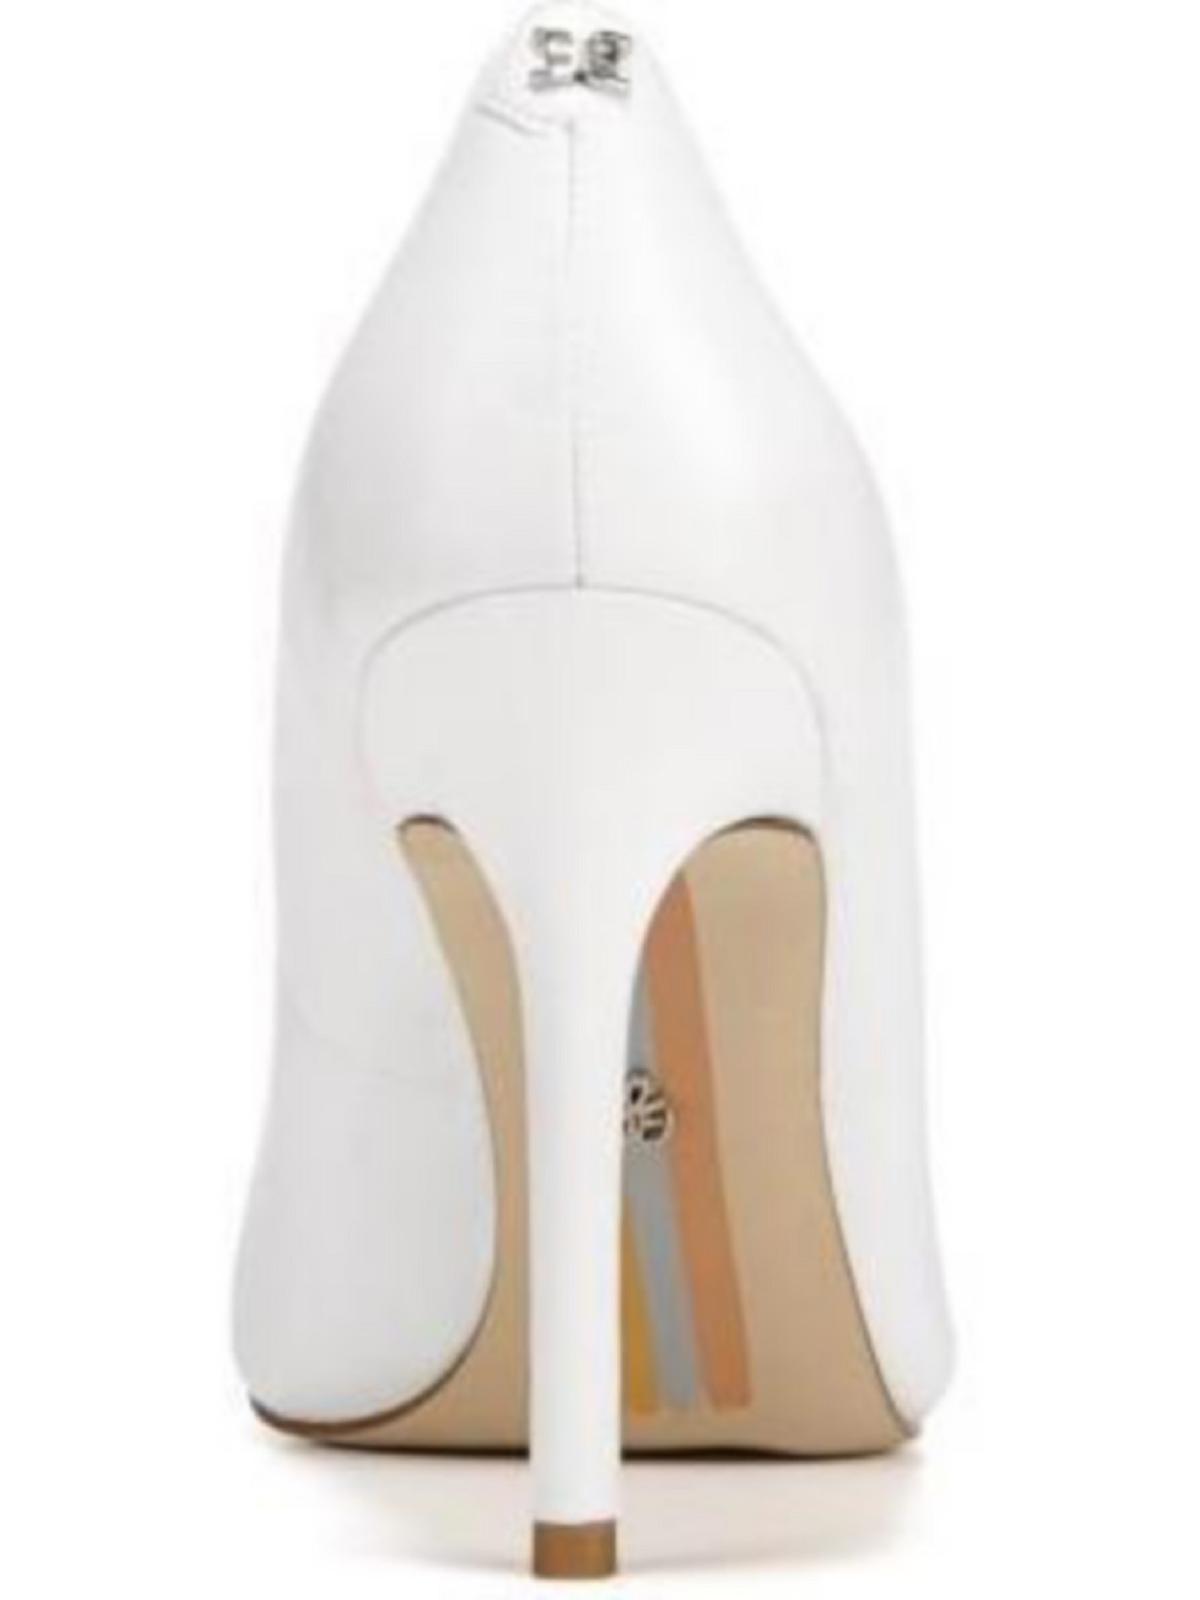 Sam Edelman Womens Hazel Leather Heels Pumps White 6 Medium (B,M) - image 3 of 3